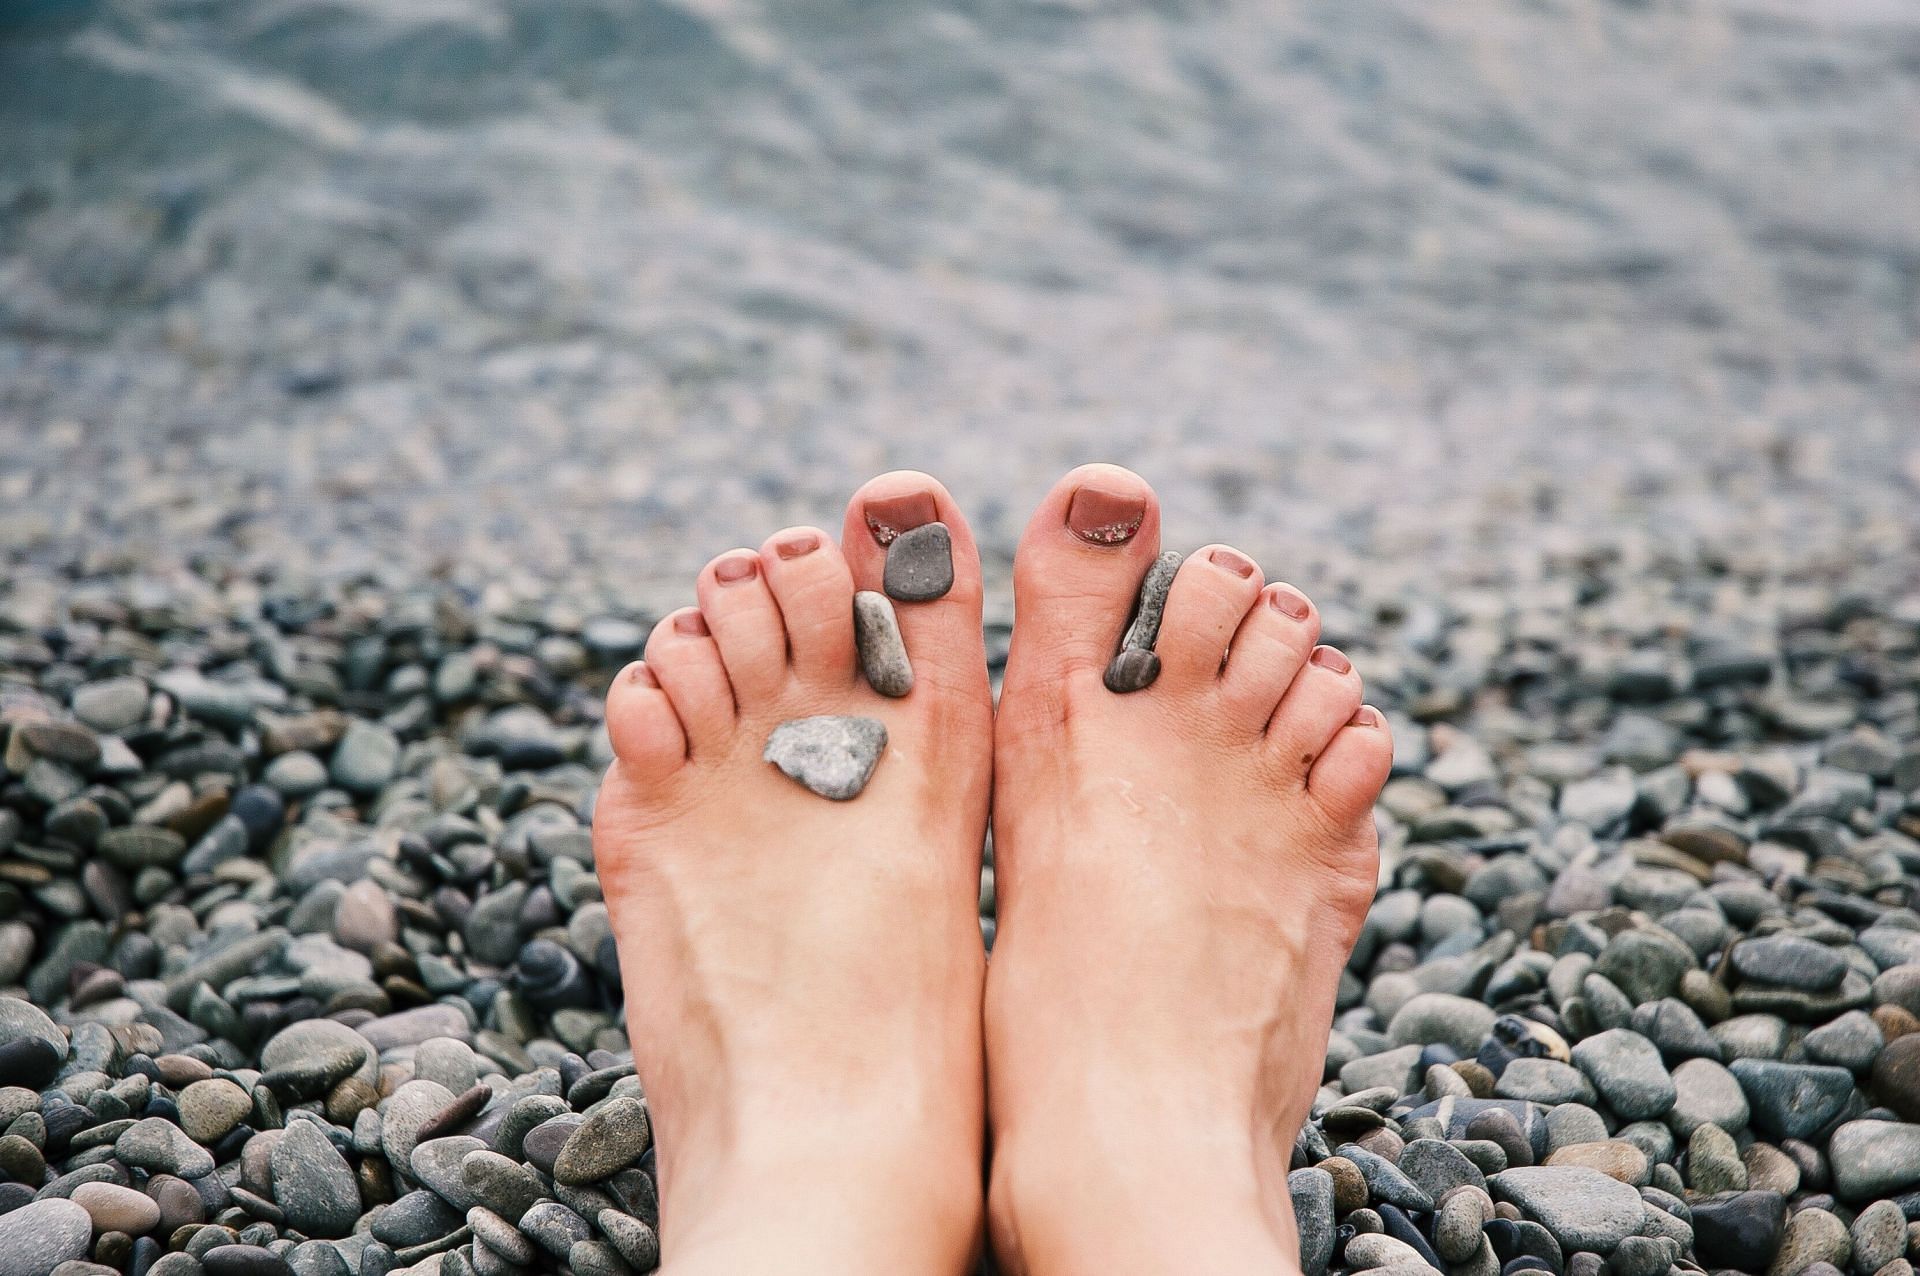 How to restore natural foot function (Image via Pexels / Evg Kowalievska)